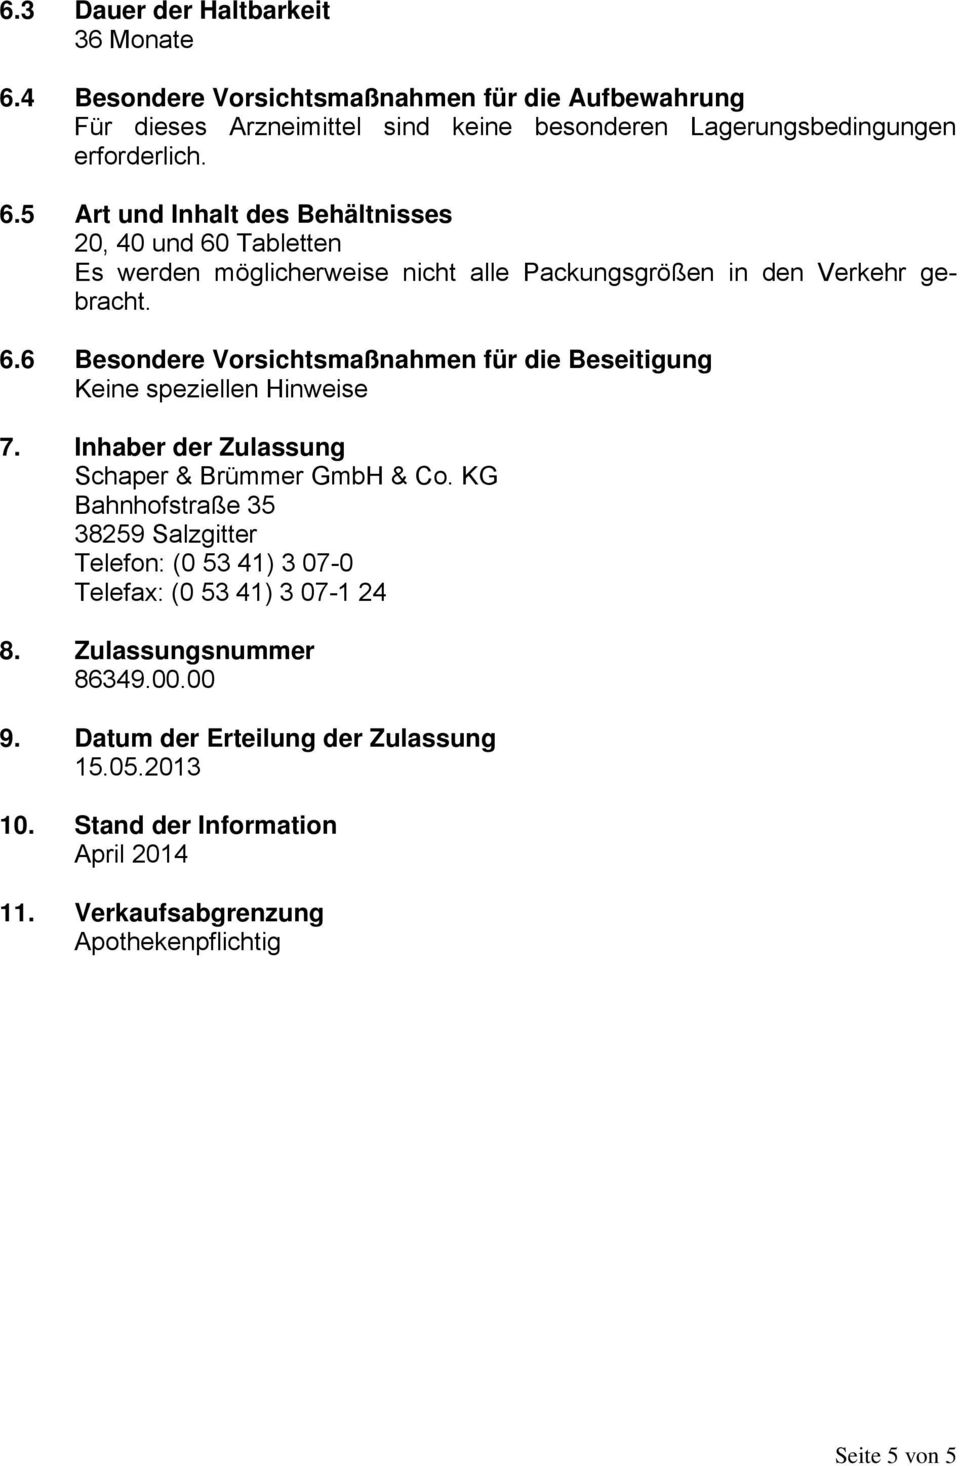 KG Bahnhofstraße 35 38259 Salzgitter Telefon: (0 53 41) 3 07-0 Telefax: (0 53 41) 3 07-1 24 8. Zulassungsnummer 86349.00.00 9. Datum der Erteilung der Zulassung 15.05.2013 10.